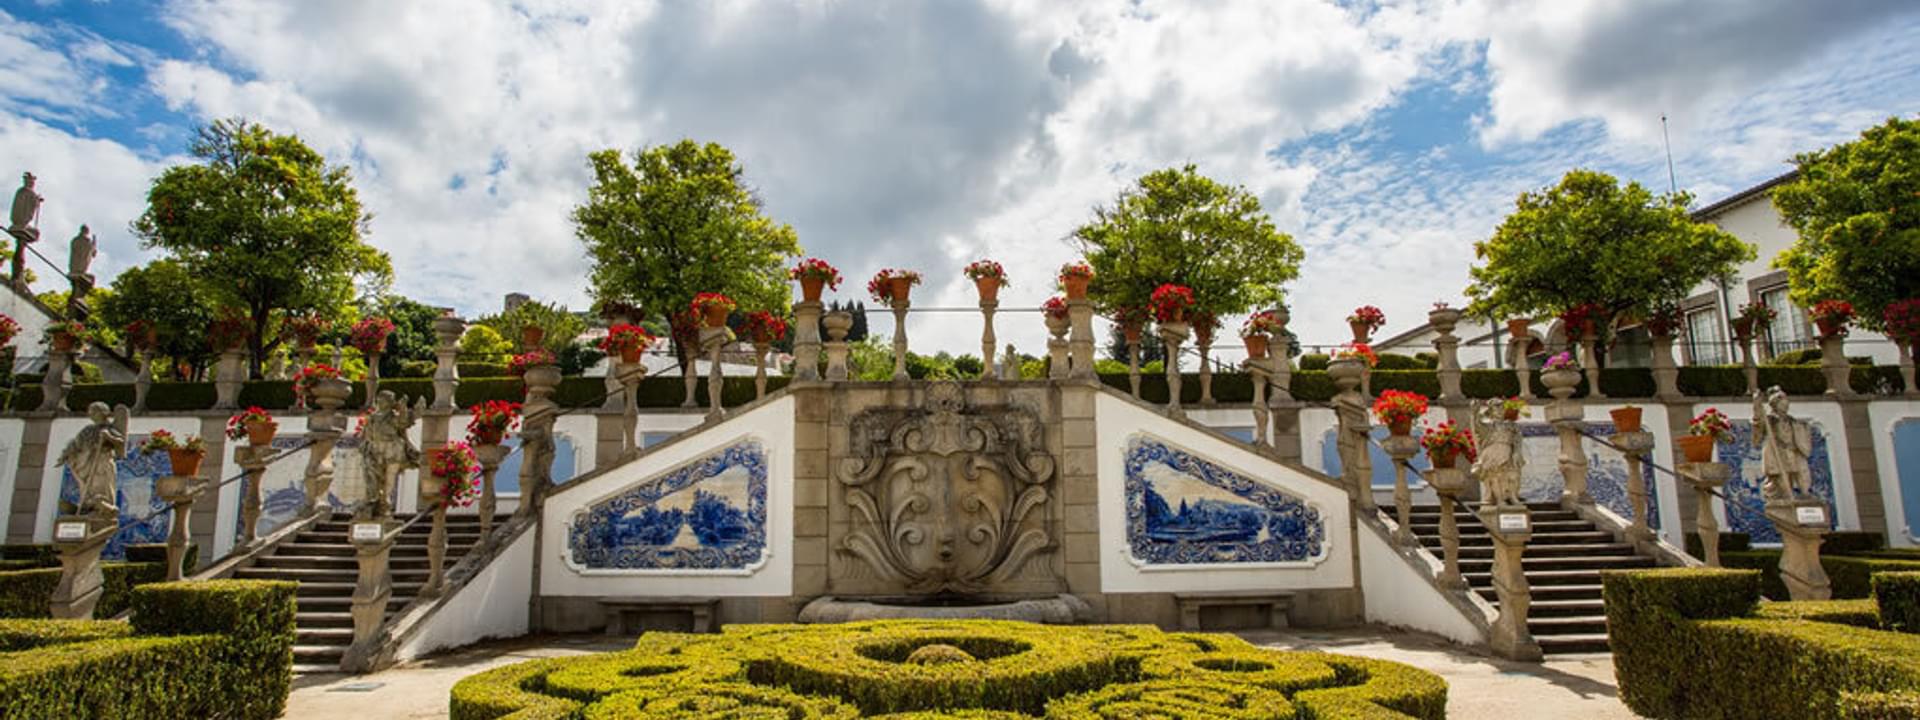 Bishop’s Palace Garden in Castelo Branco